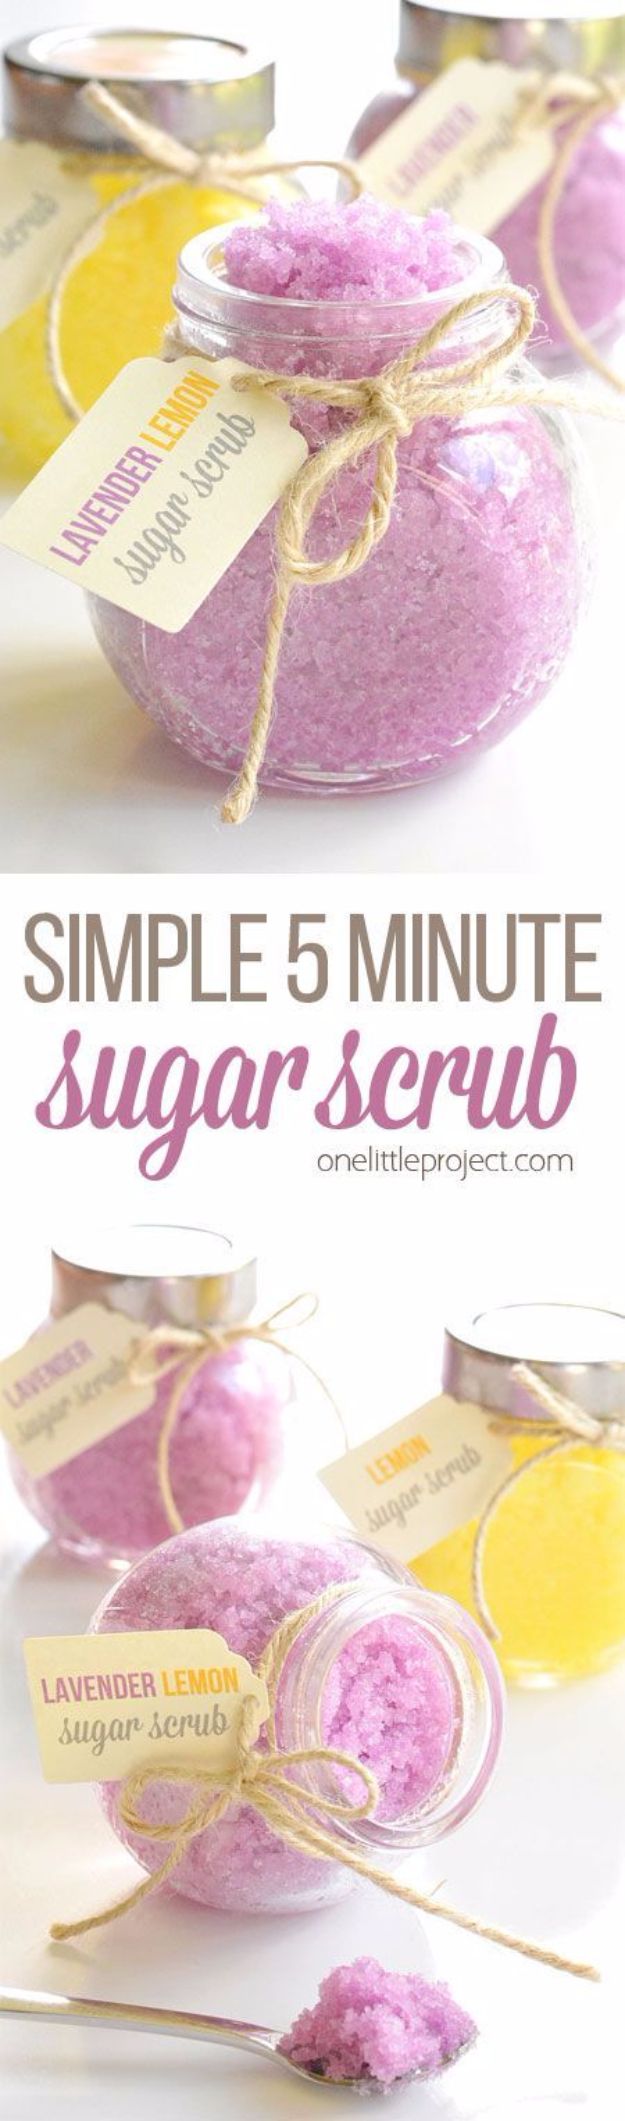 DIY Sugar Scrub Recipes – Homemade Sugar Scrub – Easy and Quick Beauty Products …